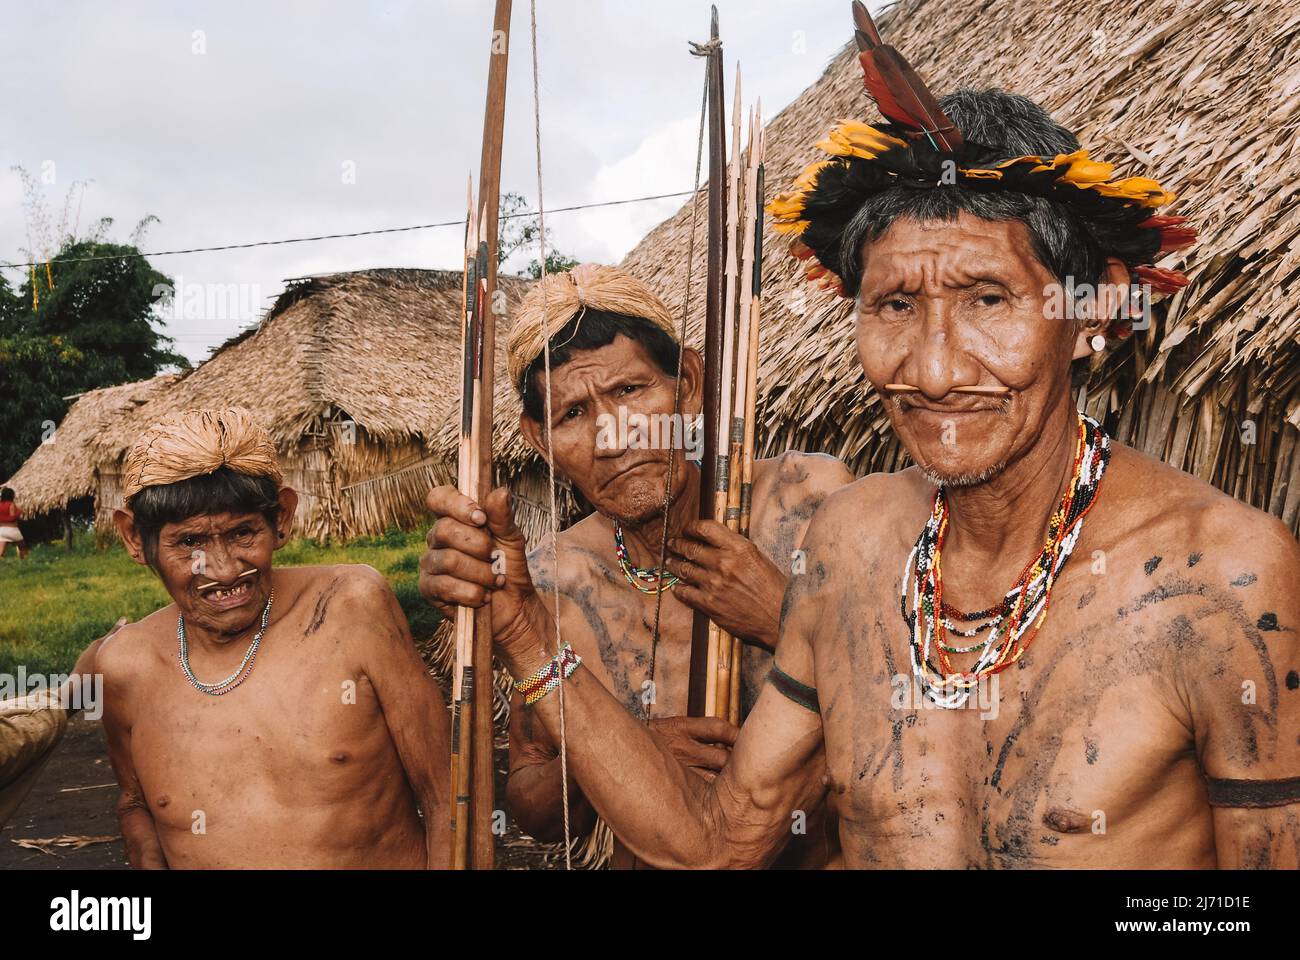 Indian men from the Arara of Laranjal tribe near Xingu River, Amazon, Brazil. 2007. Stock Photo